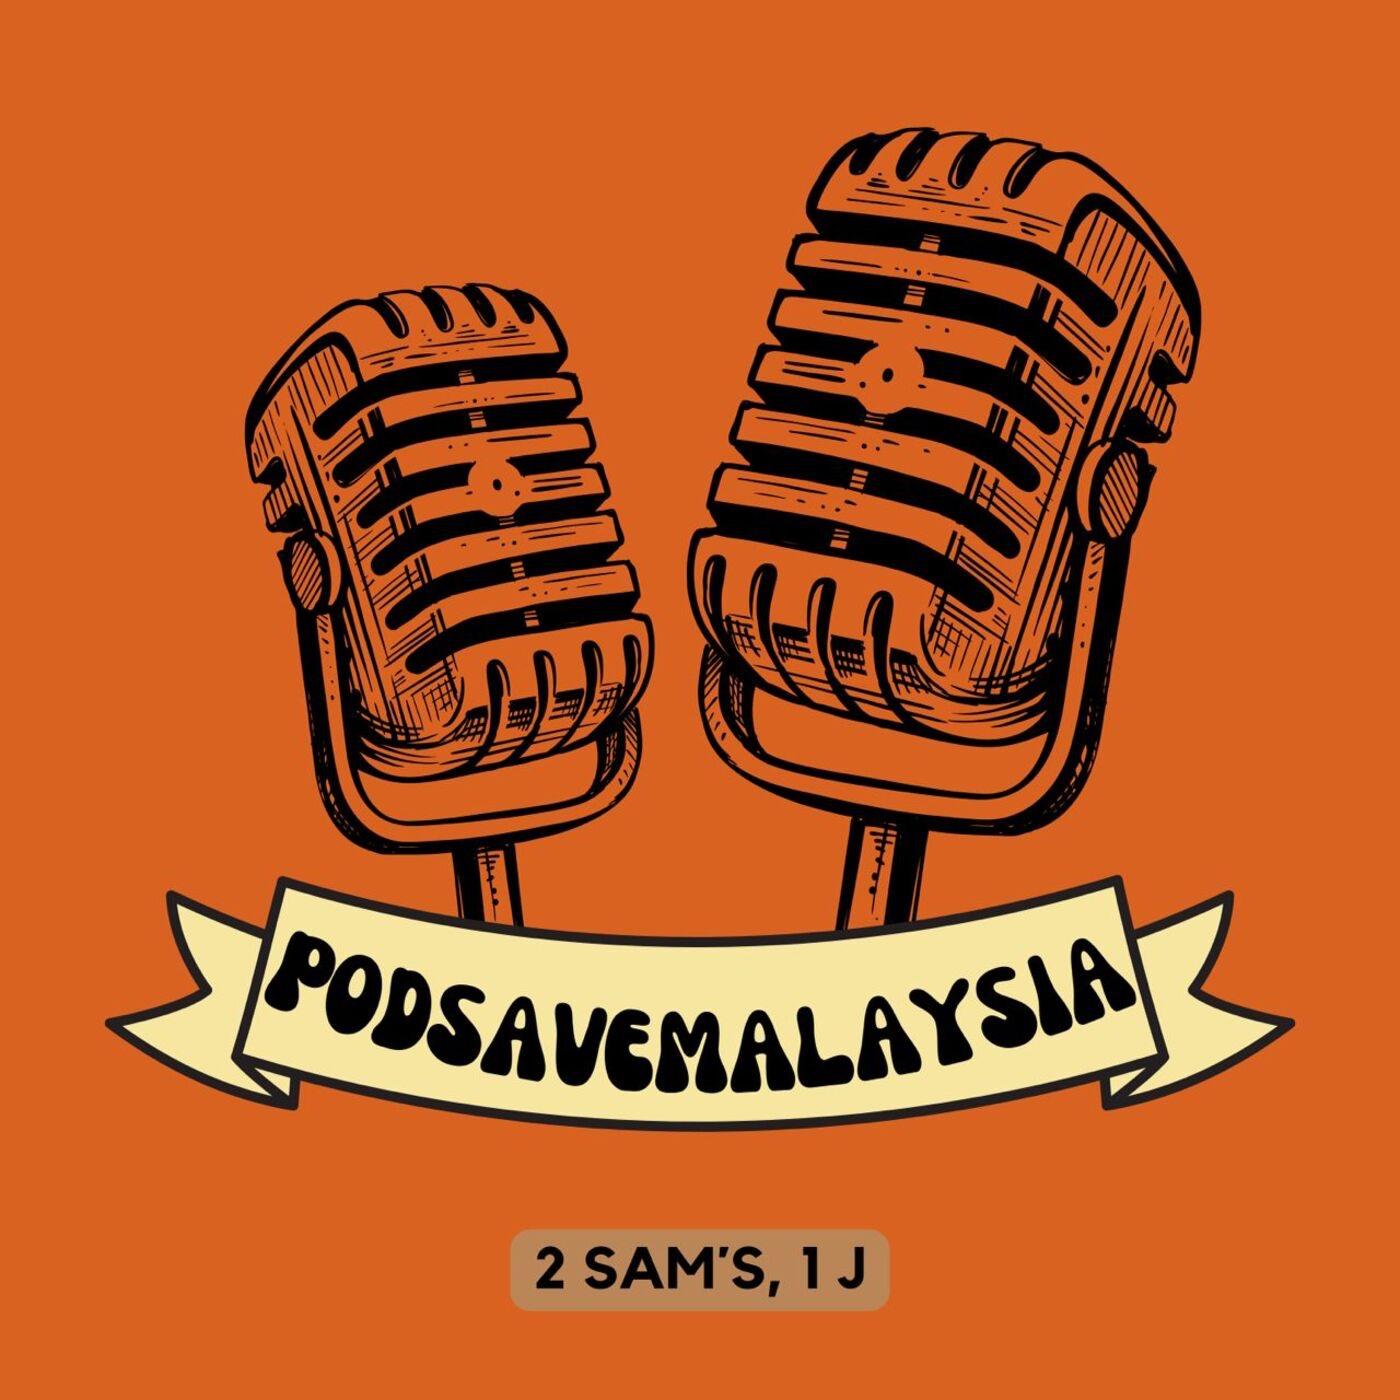 PodSave Malaysia